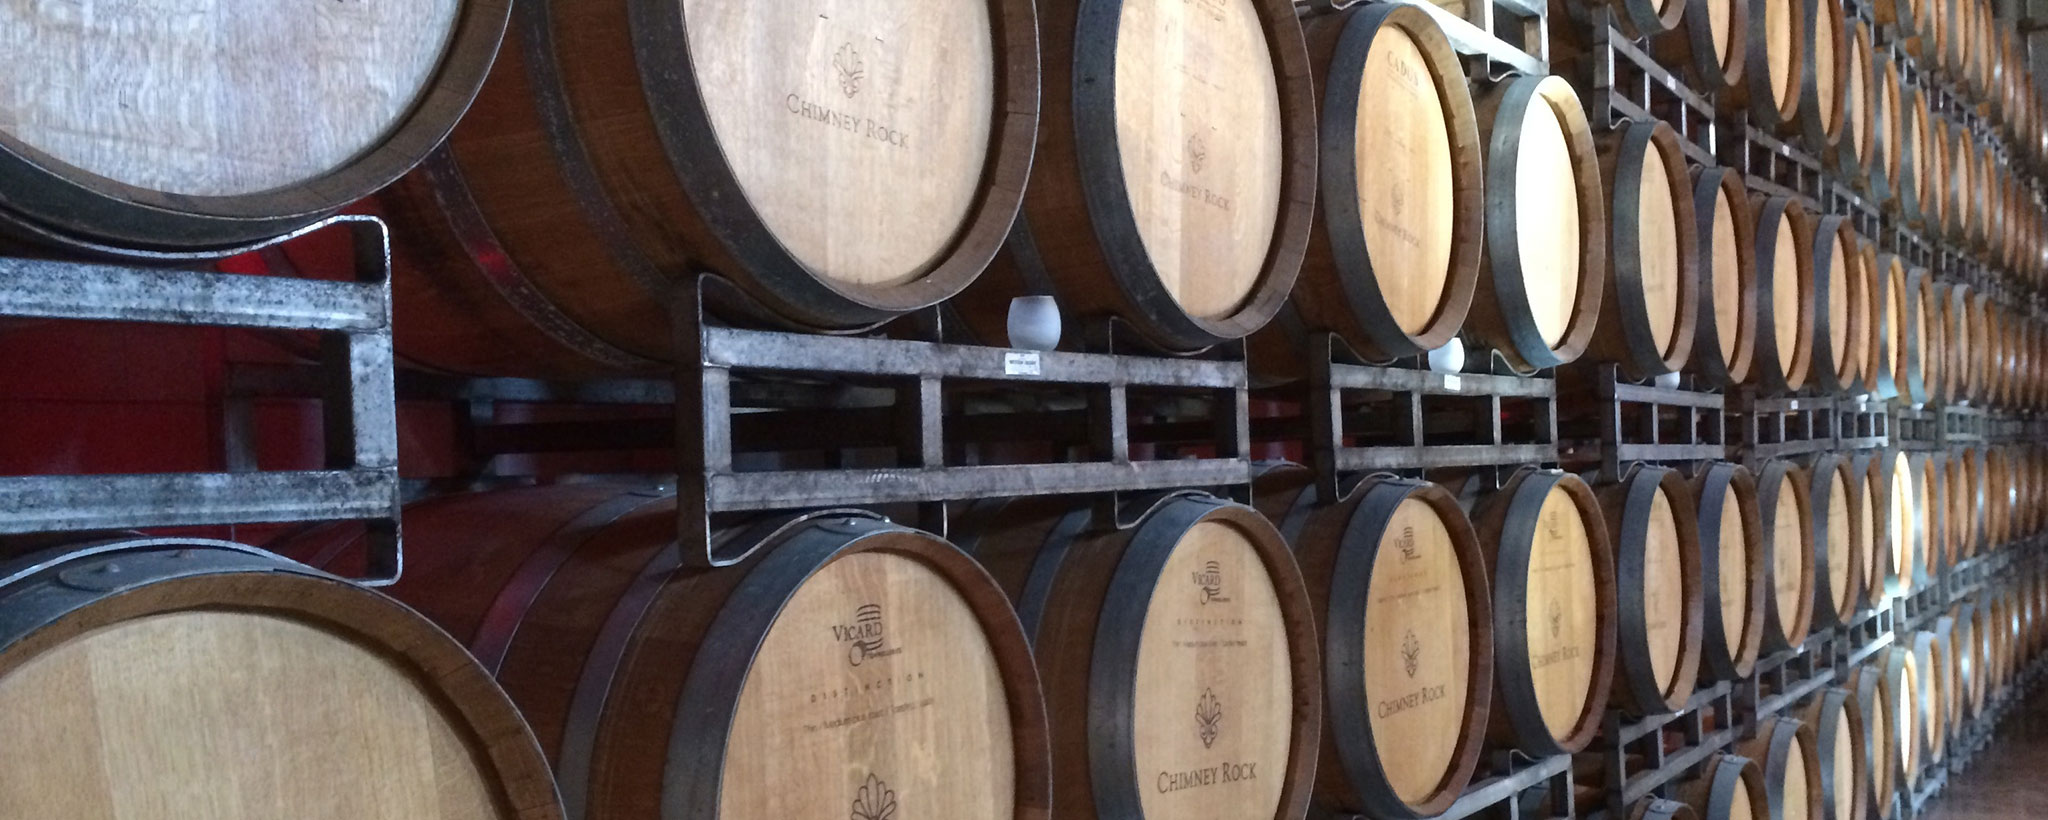 wine stored in barrels